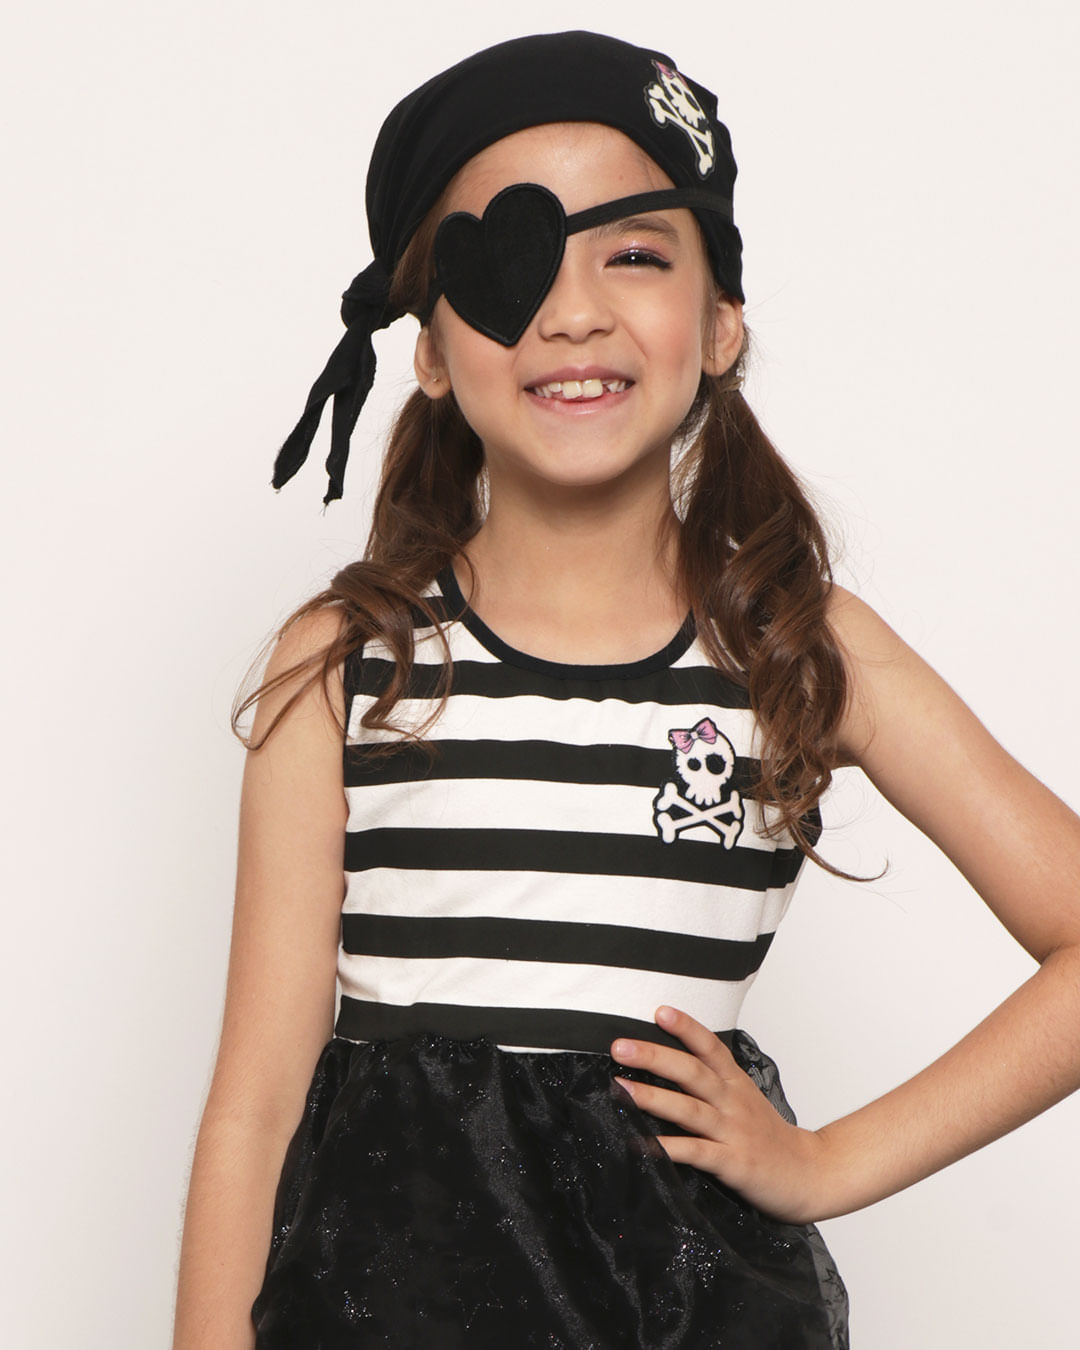 Fantasia de Pirata Vestido Para Bebê Menina